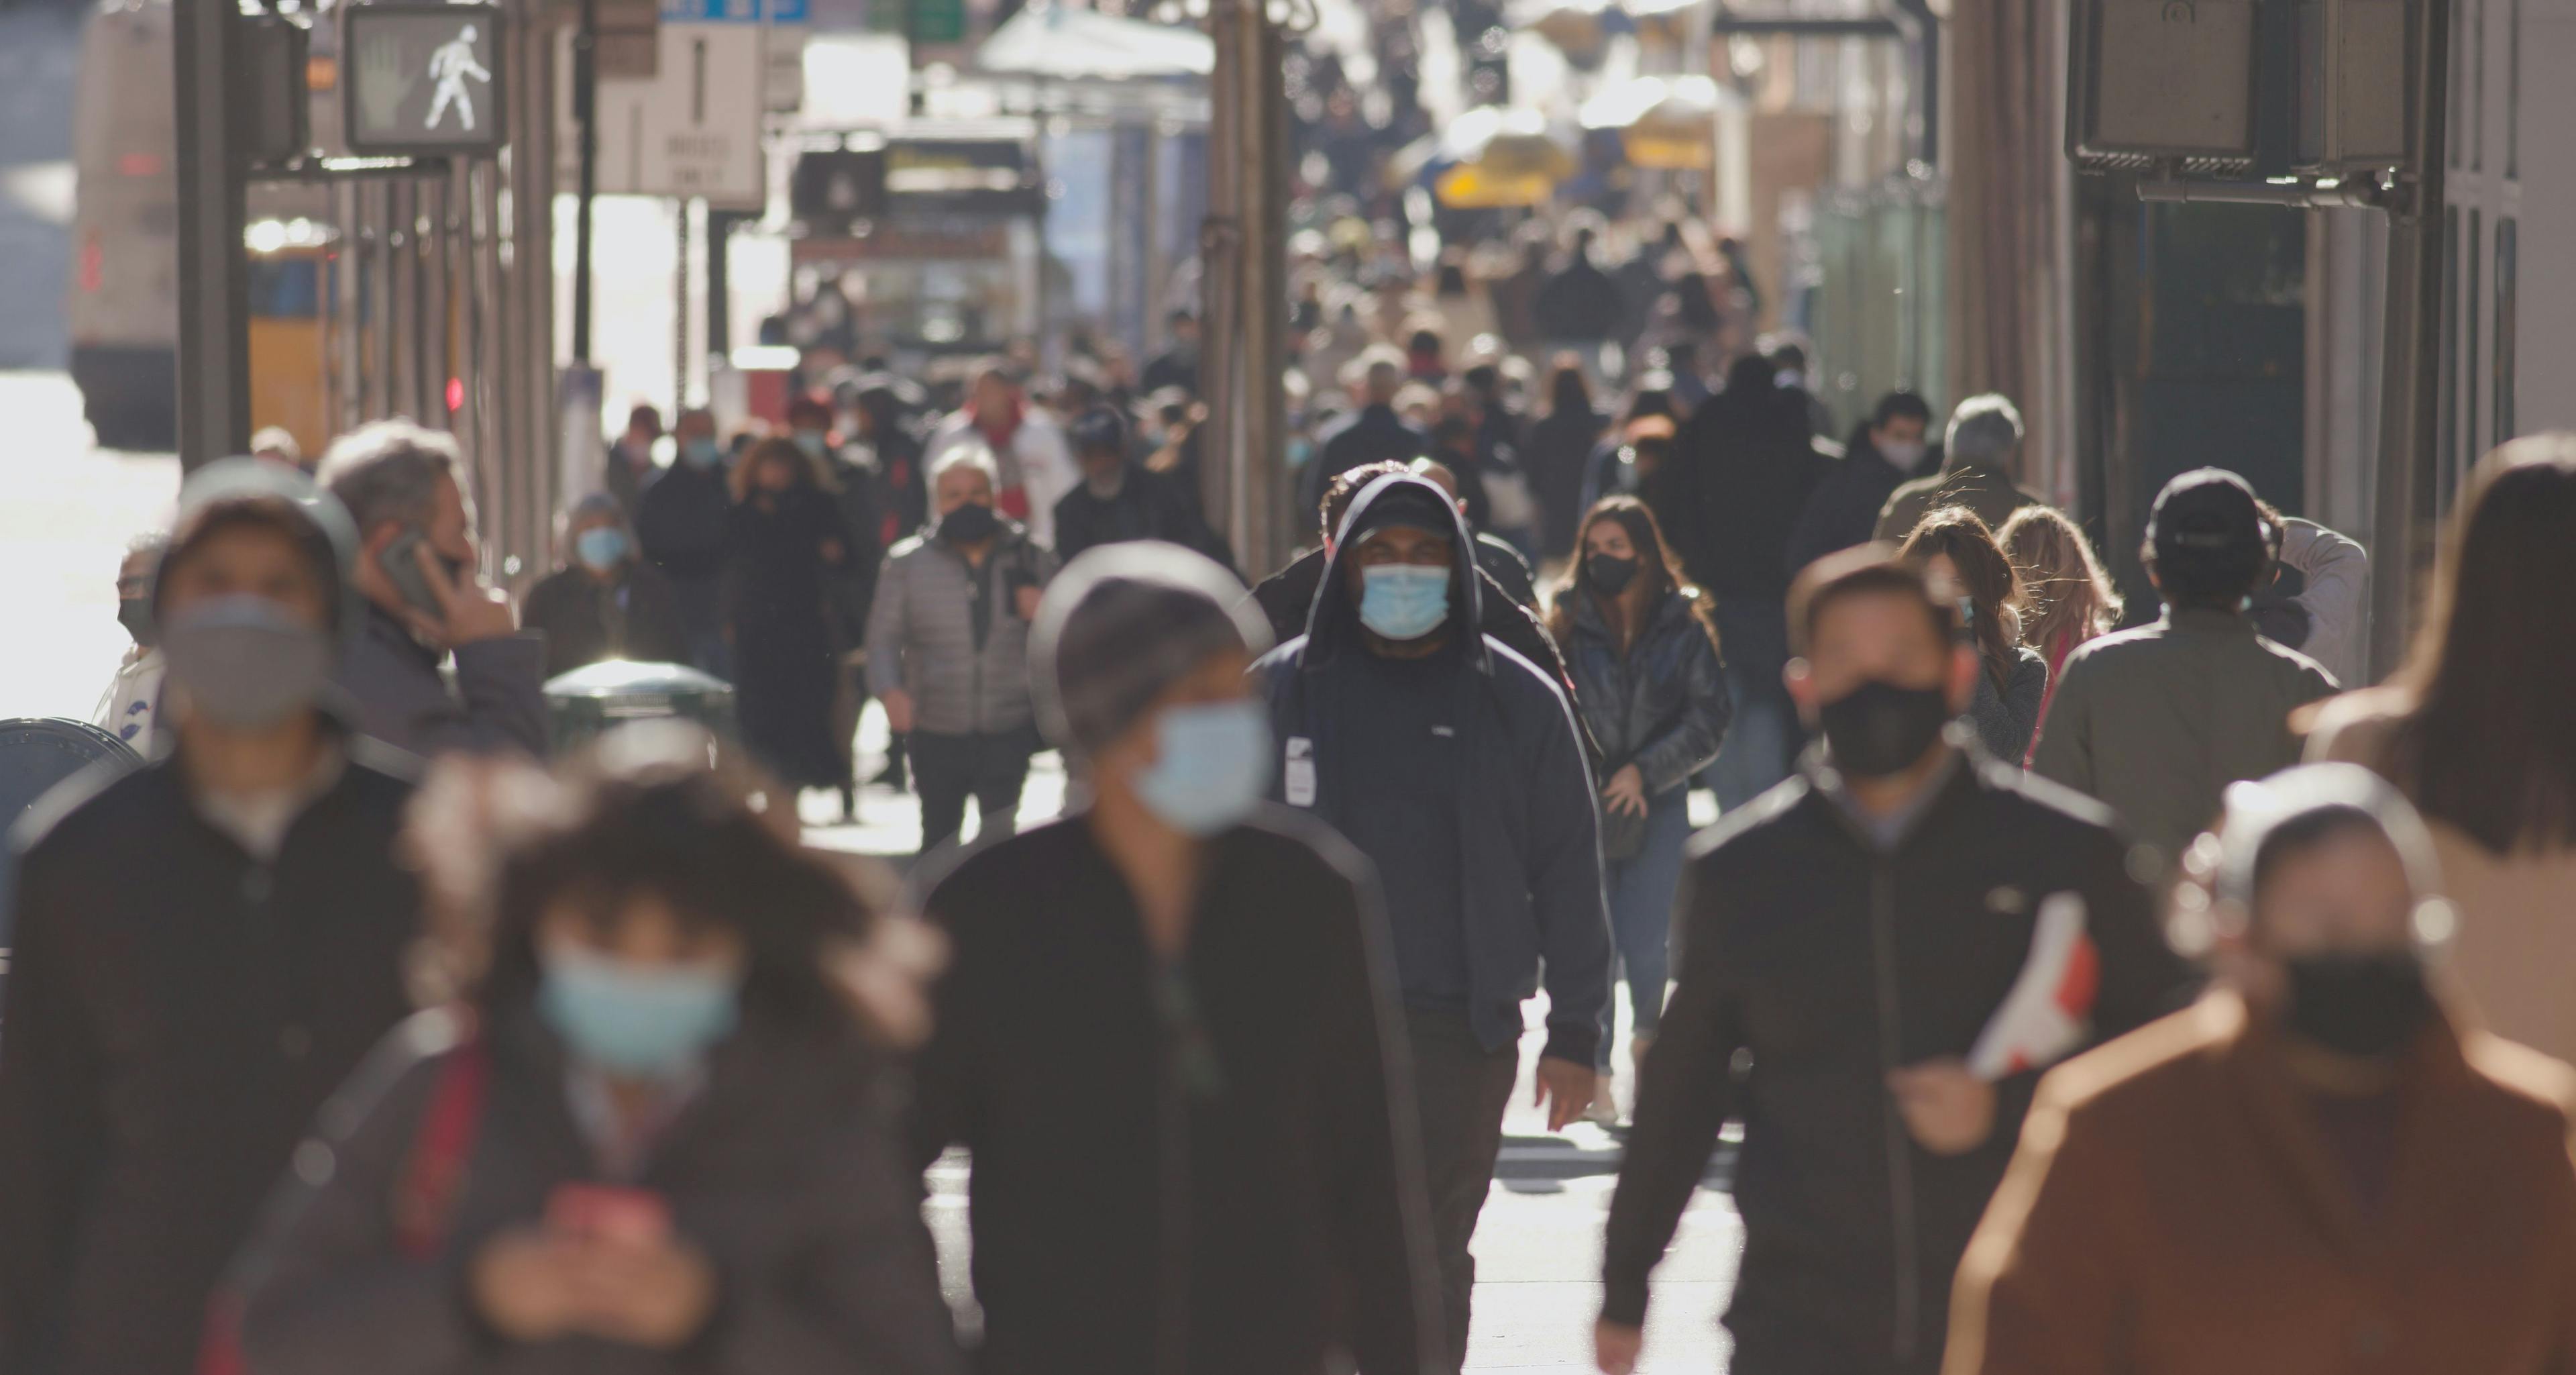 Anonymous crowd of people walking street wearing masks during covid 19 coronavirus pandemic | Image credit: Blvdone- stock.adobe.com